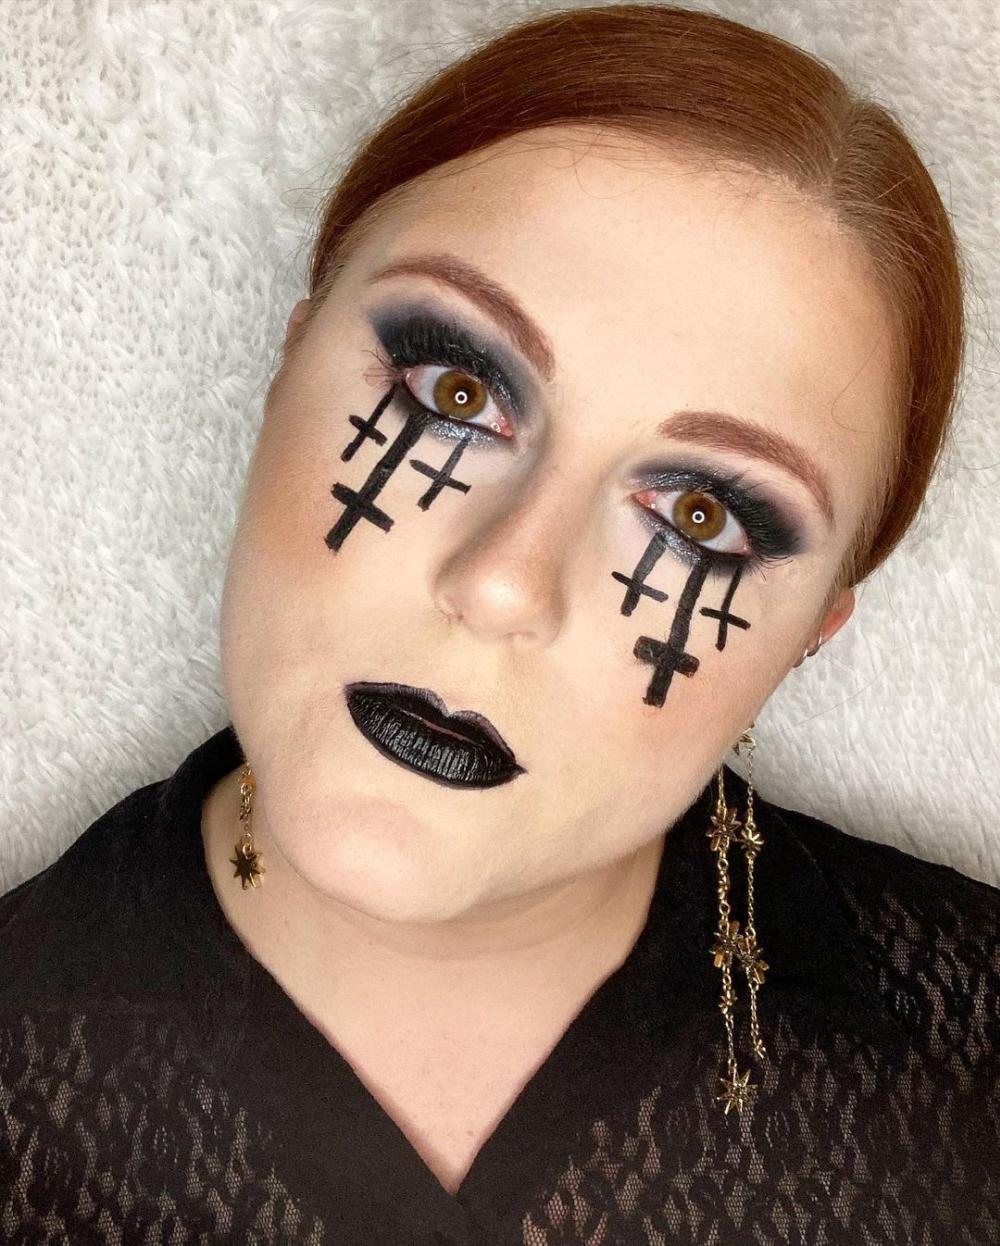 Reversed crosses easy halloween makeup ideas for women